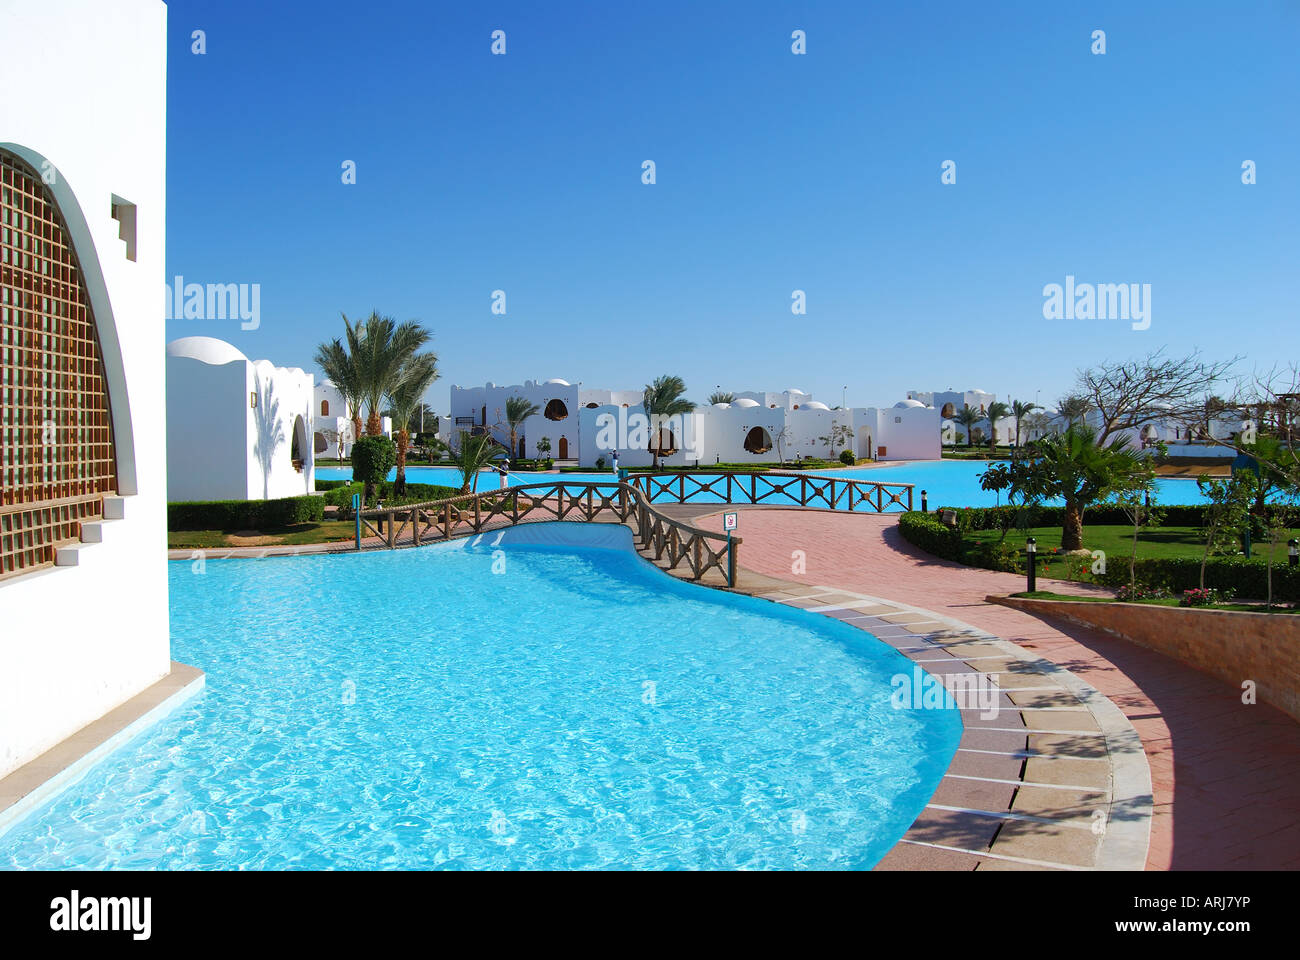 Hilton Dahab Resort Hotel pool, Dahab, Sinai Peninsula, Republic of Egypt Stock Photo